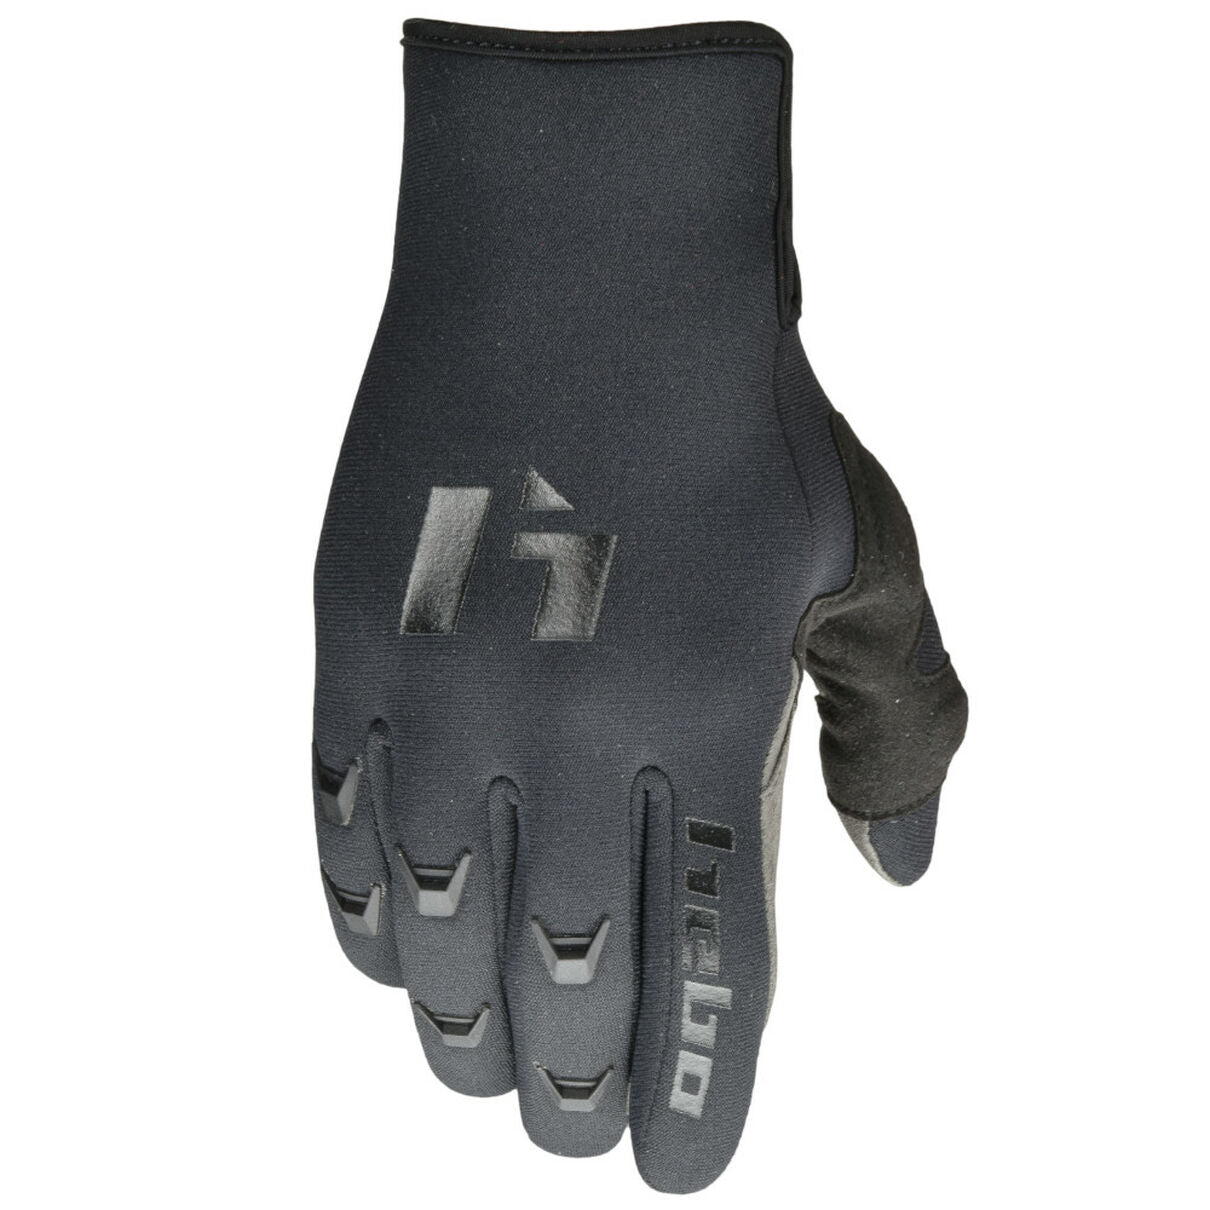 Hebo Trials Glove Neo Nano Black